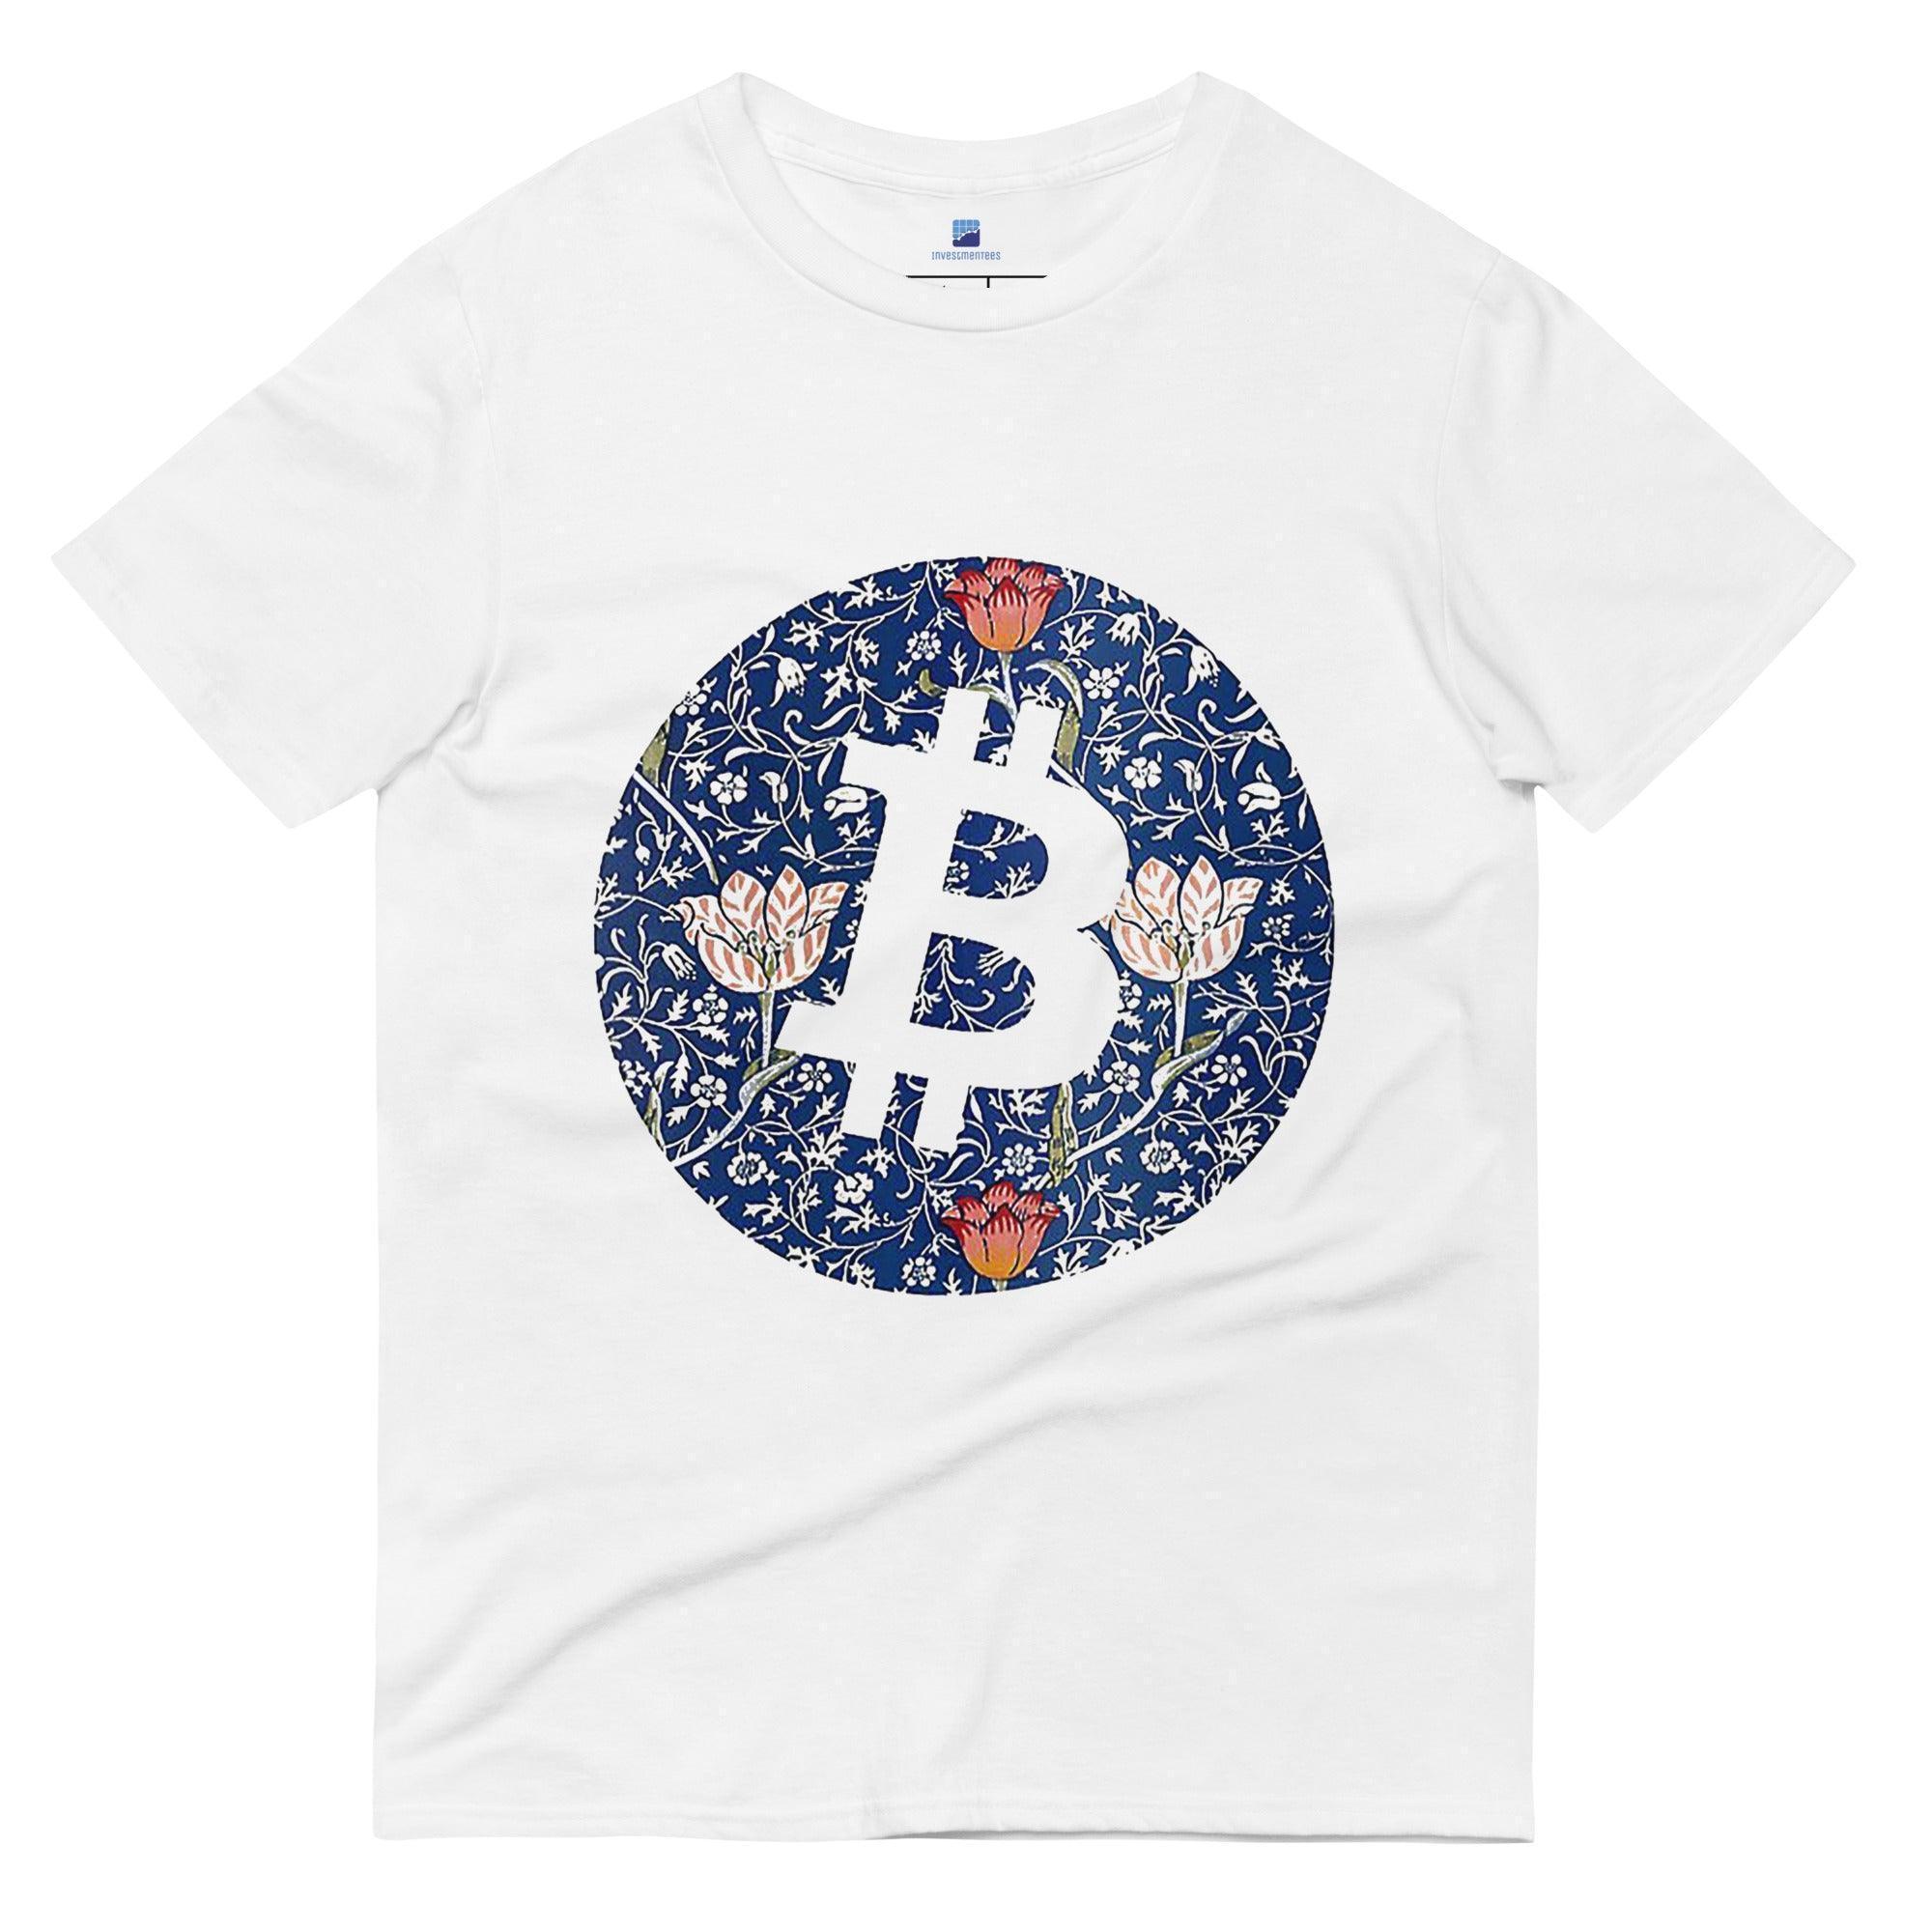 Bitcoin Mosaic Flowers T-Shirt - InvestmenTees